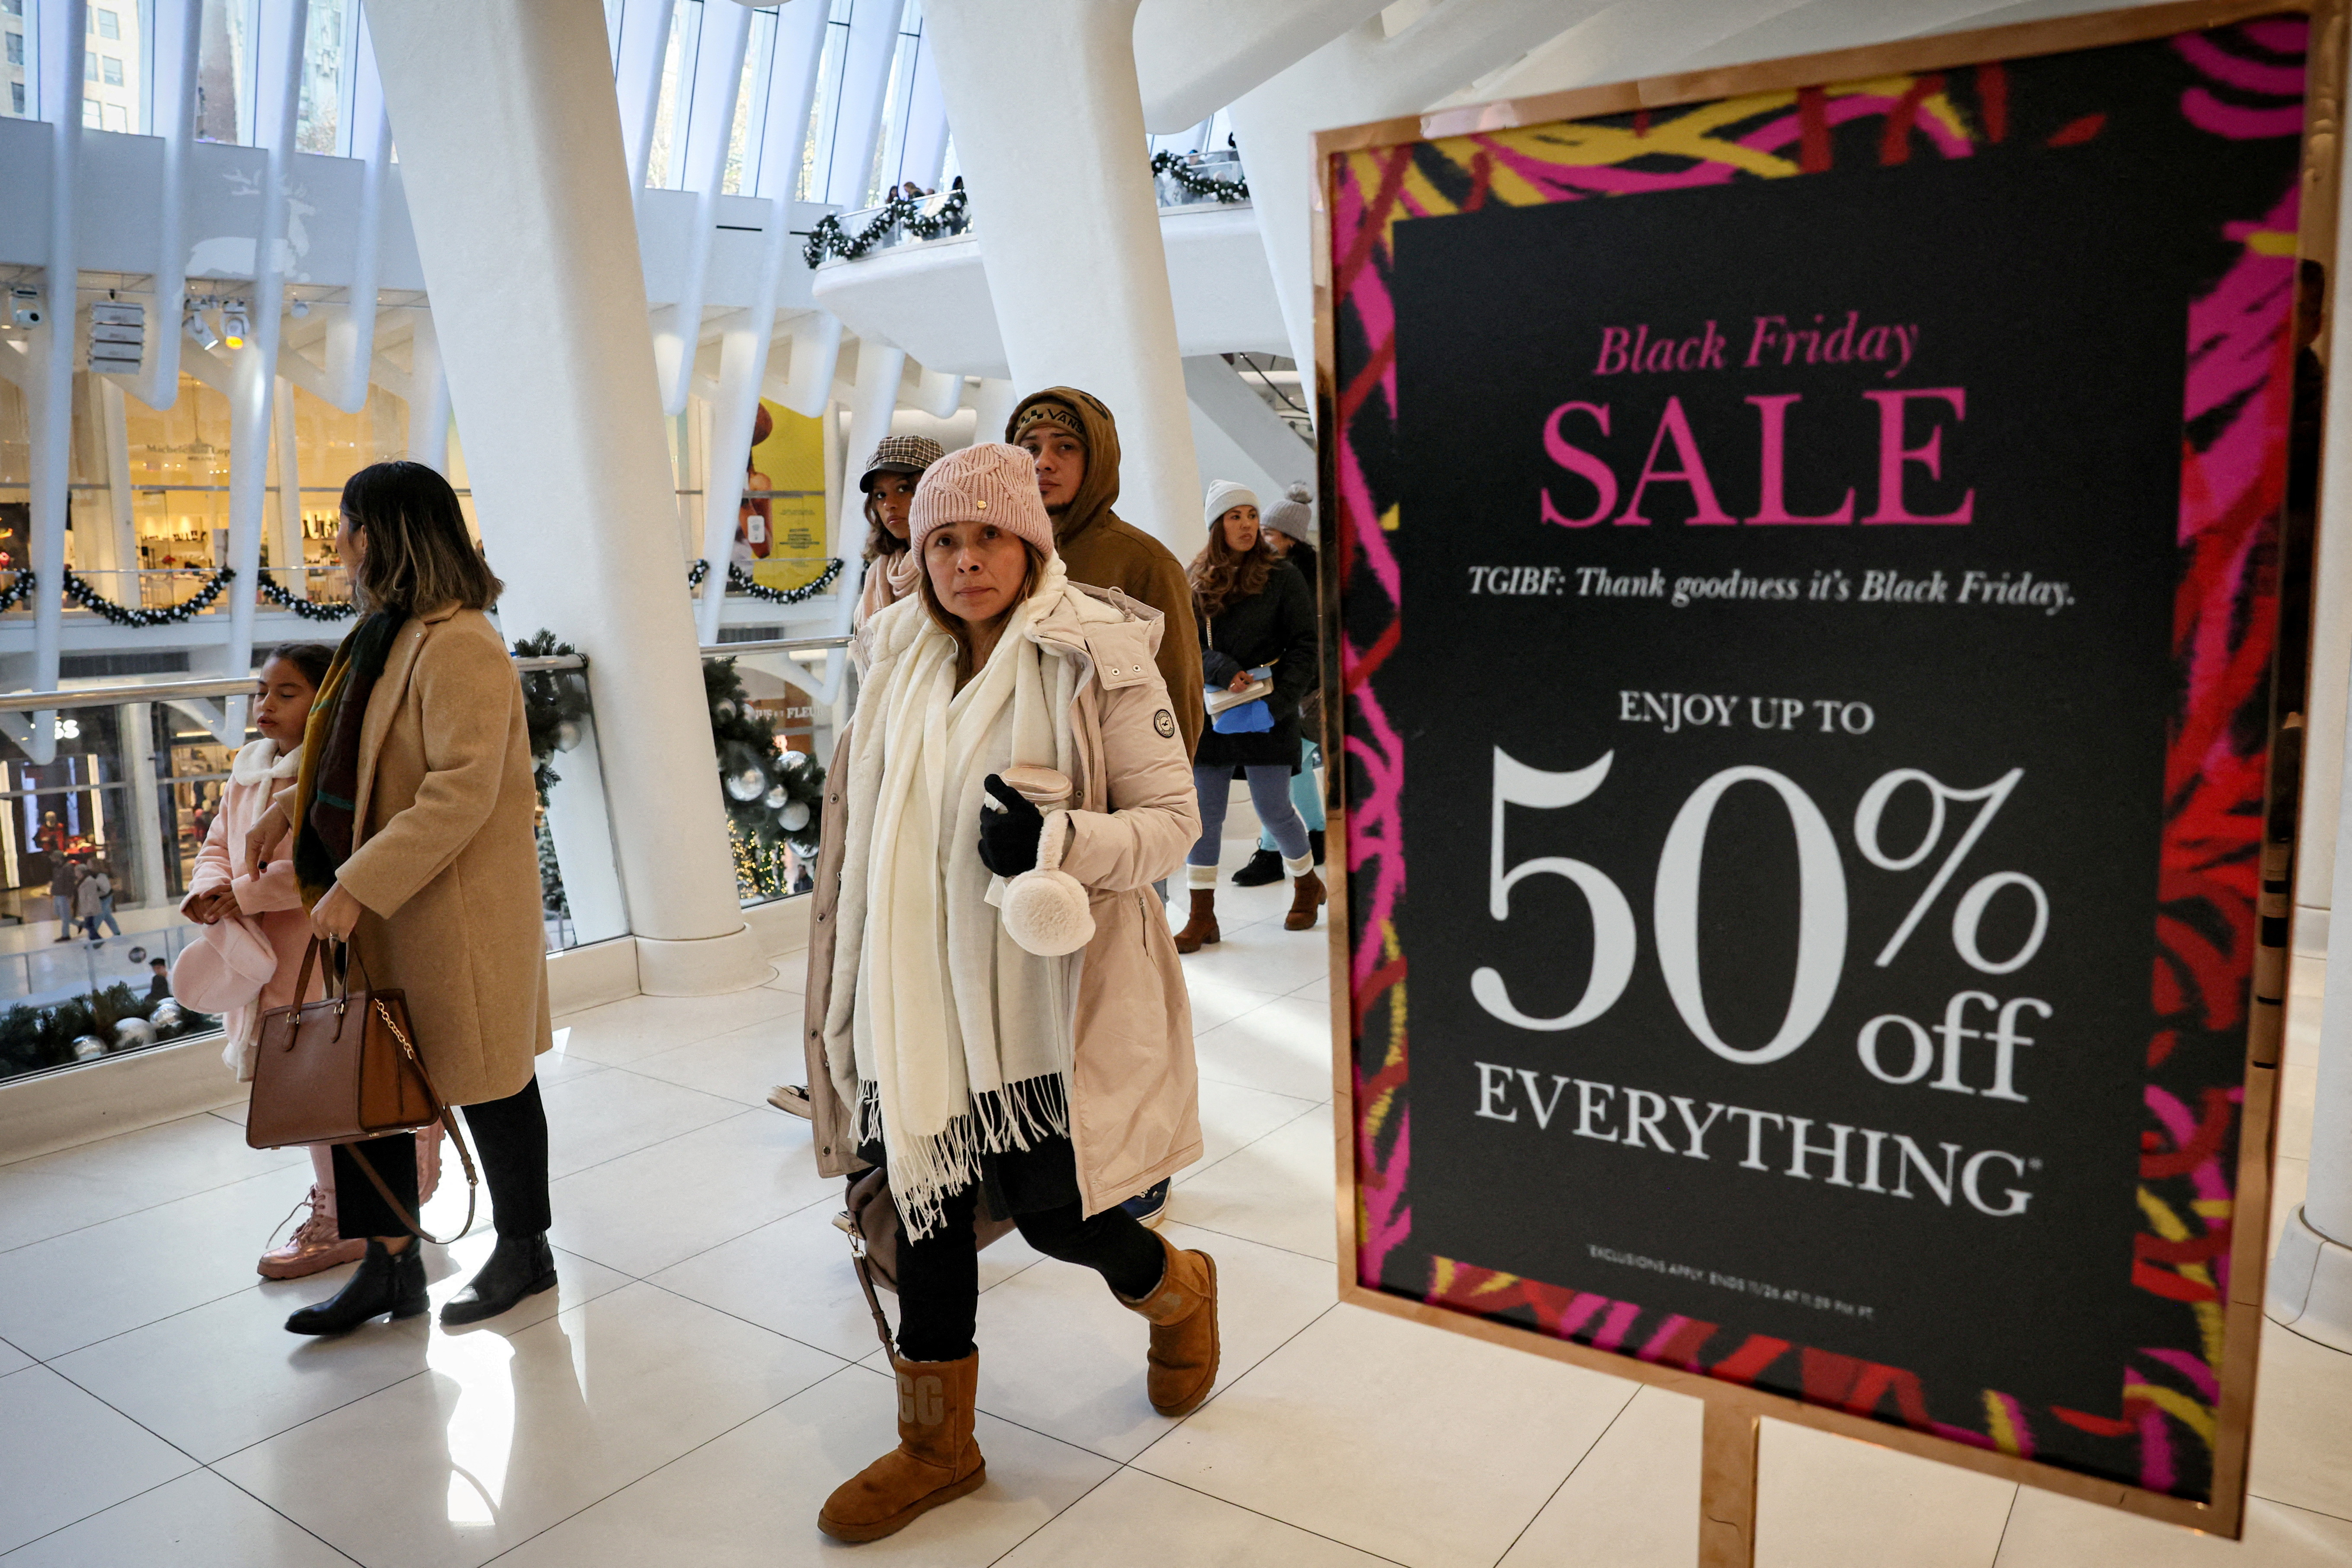 Discounts drew crowds but Black Friday week sales gain softest in